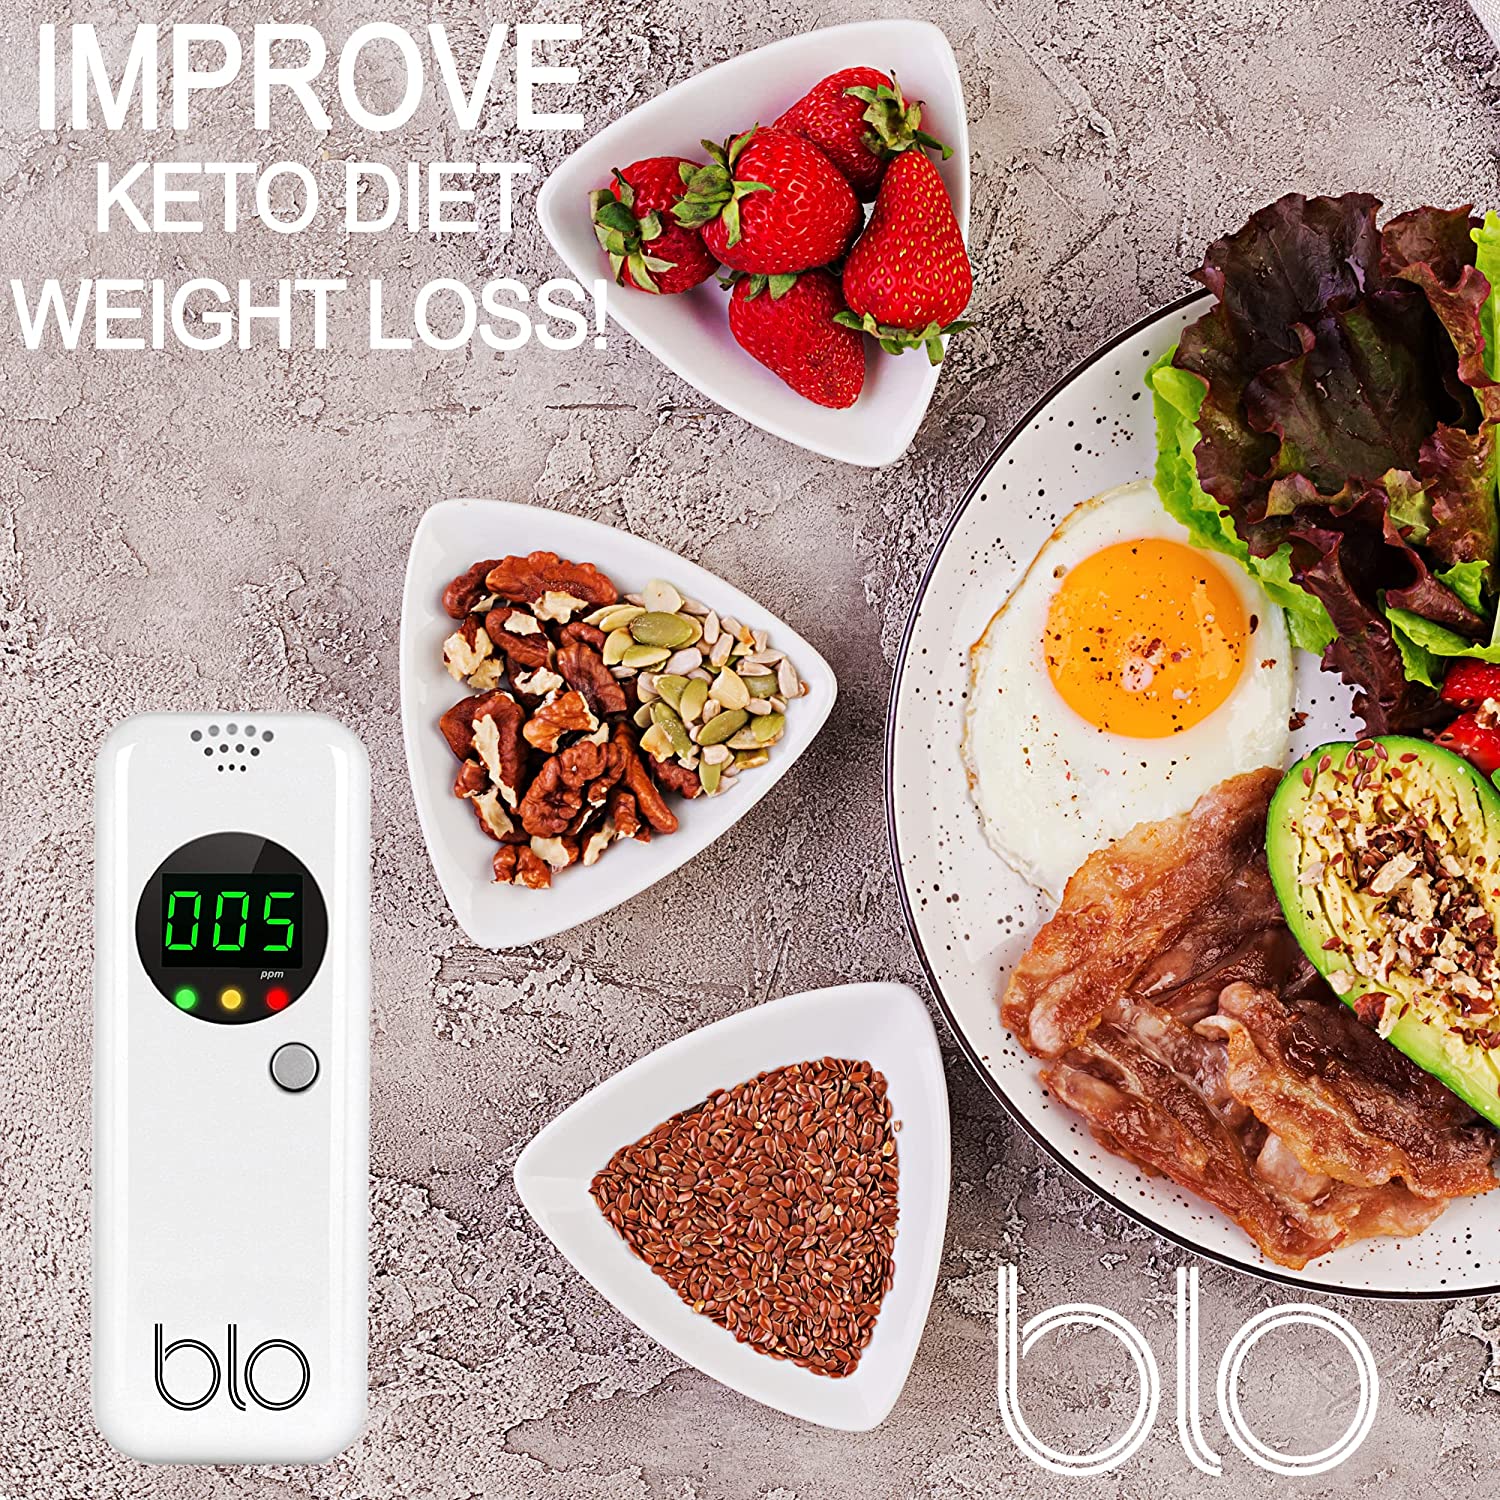 BLO Digital Ketone Breath Meter Analyzer with 10 Mouthpieces